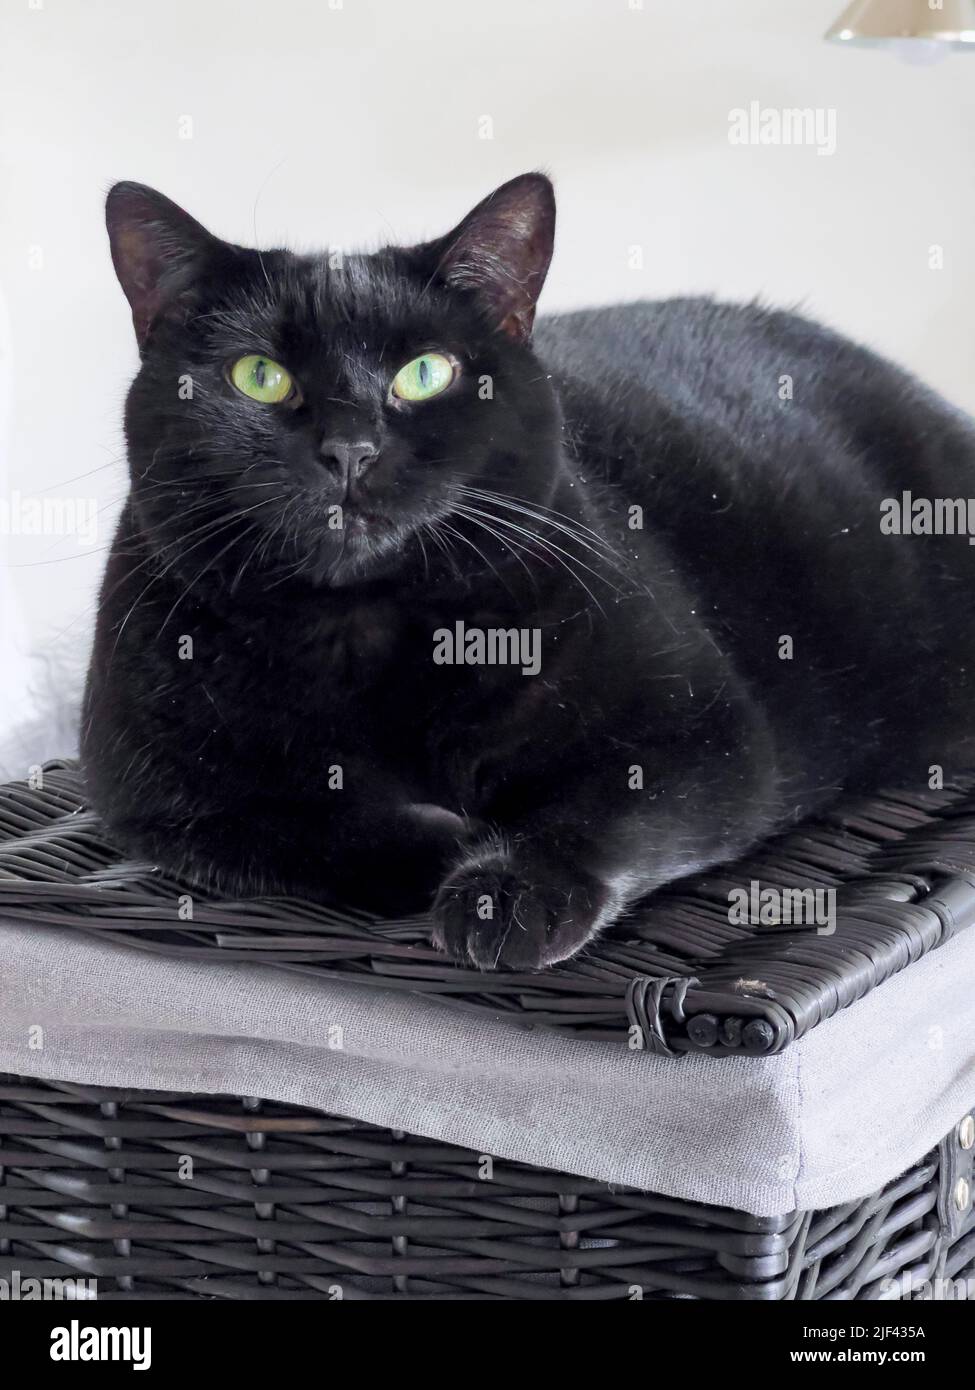 Short-haired black cat sitting on a black wicker picnic hamper. Stock Photo